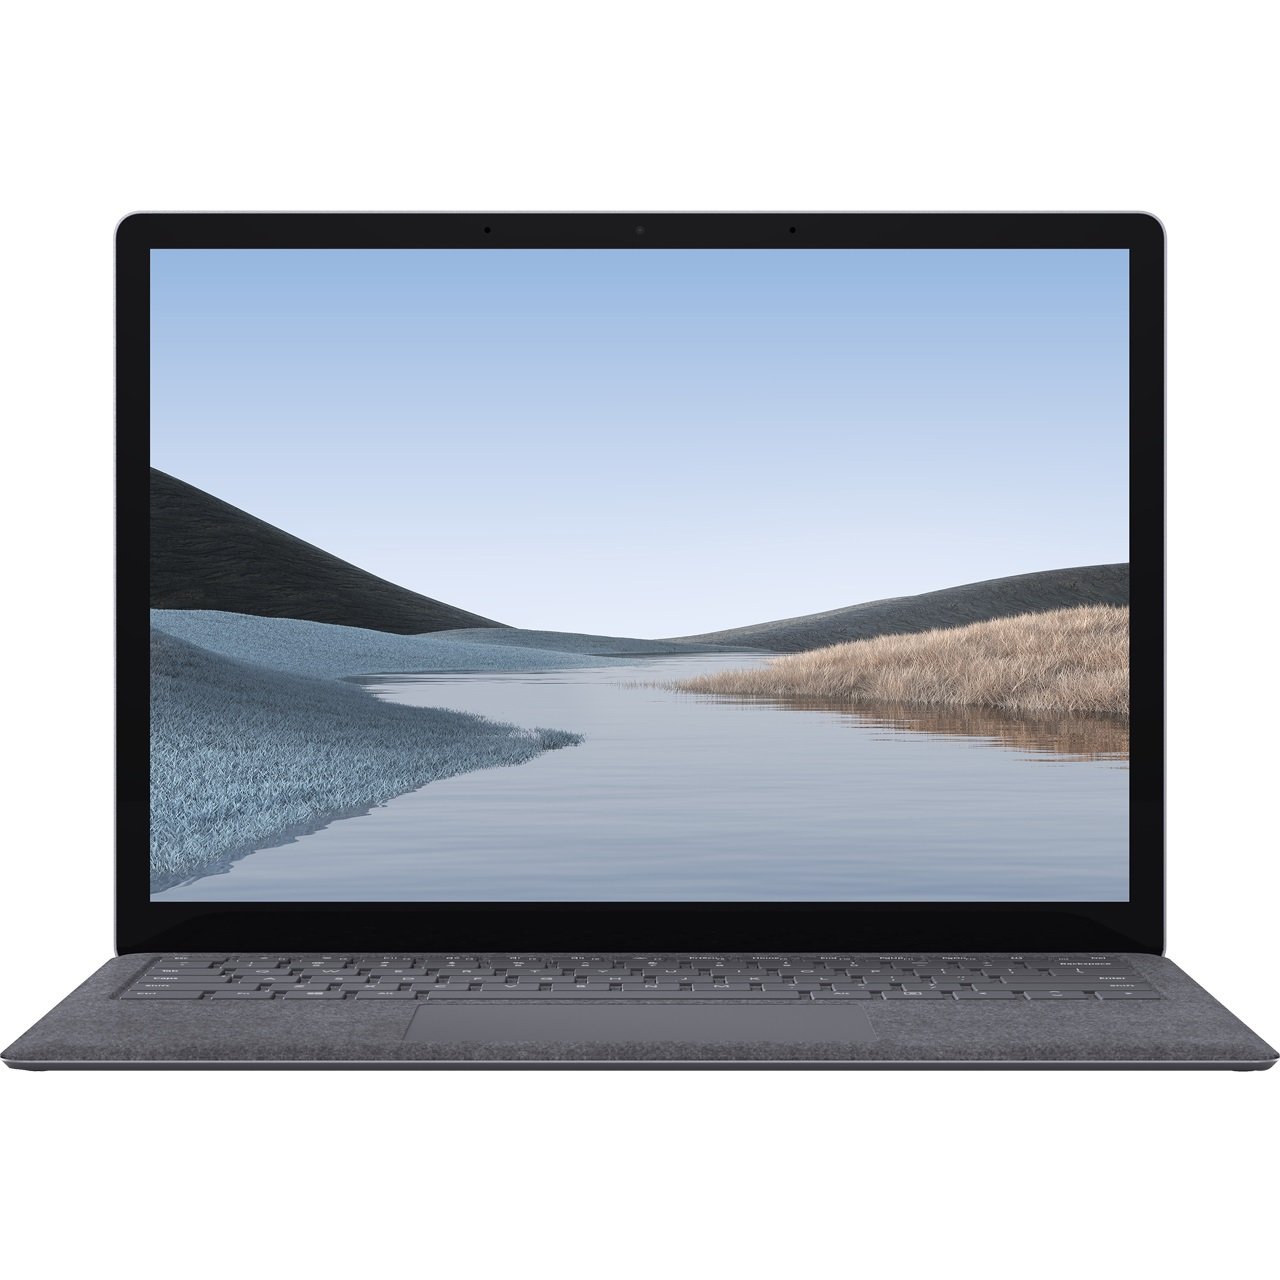 Microsoft Surface Laptop 3 13.5in i5 8GB 128GB - Platinum